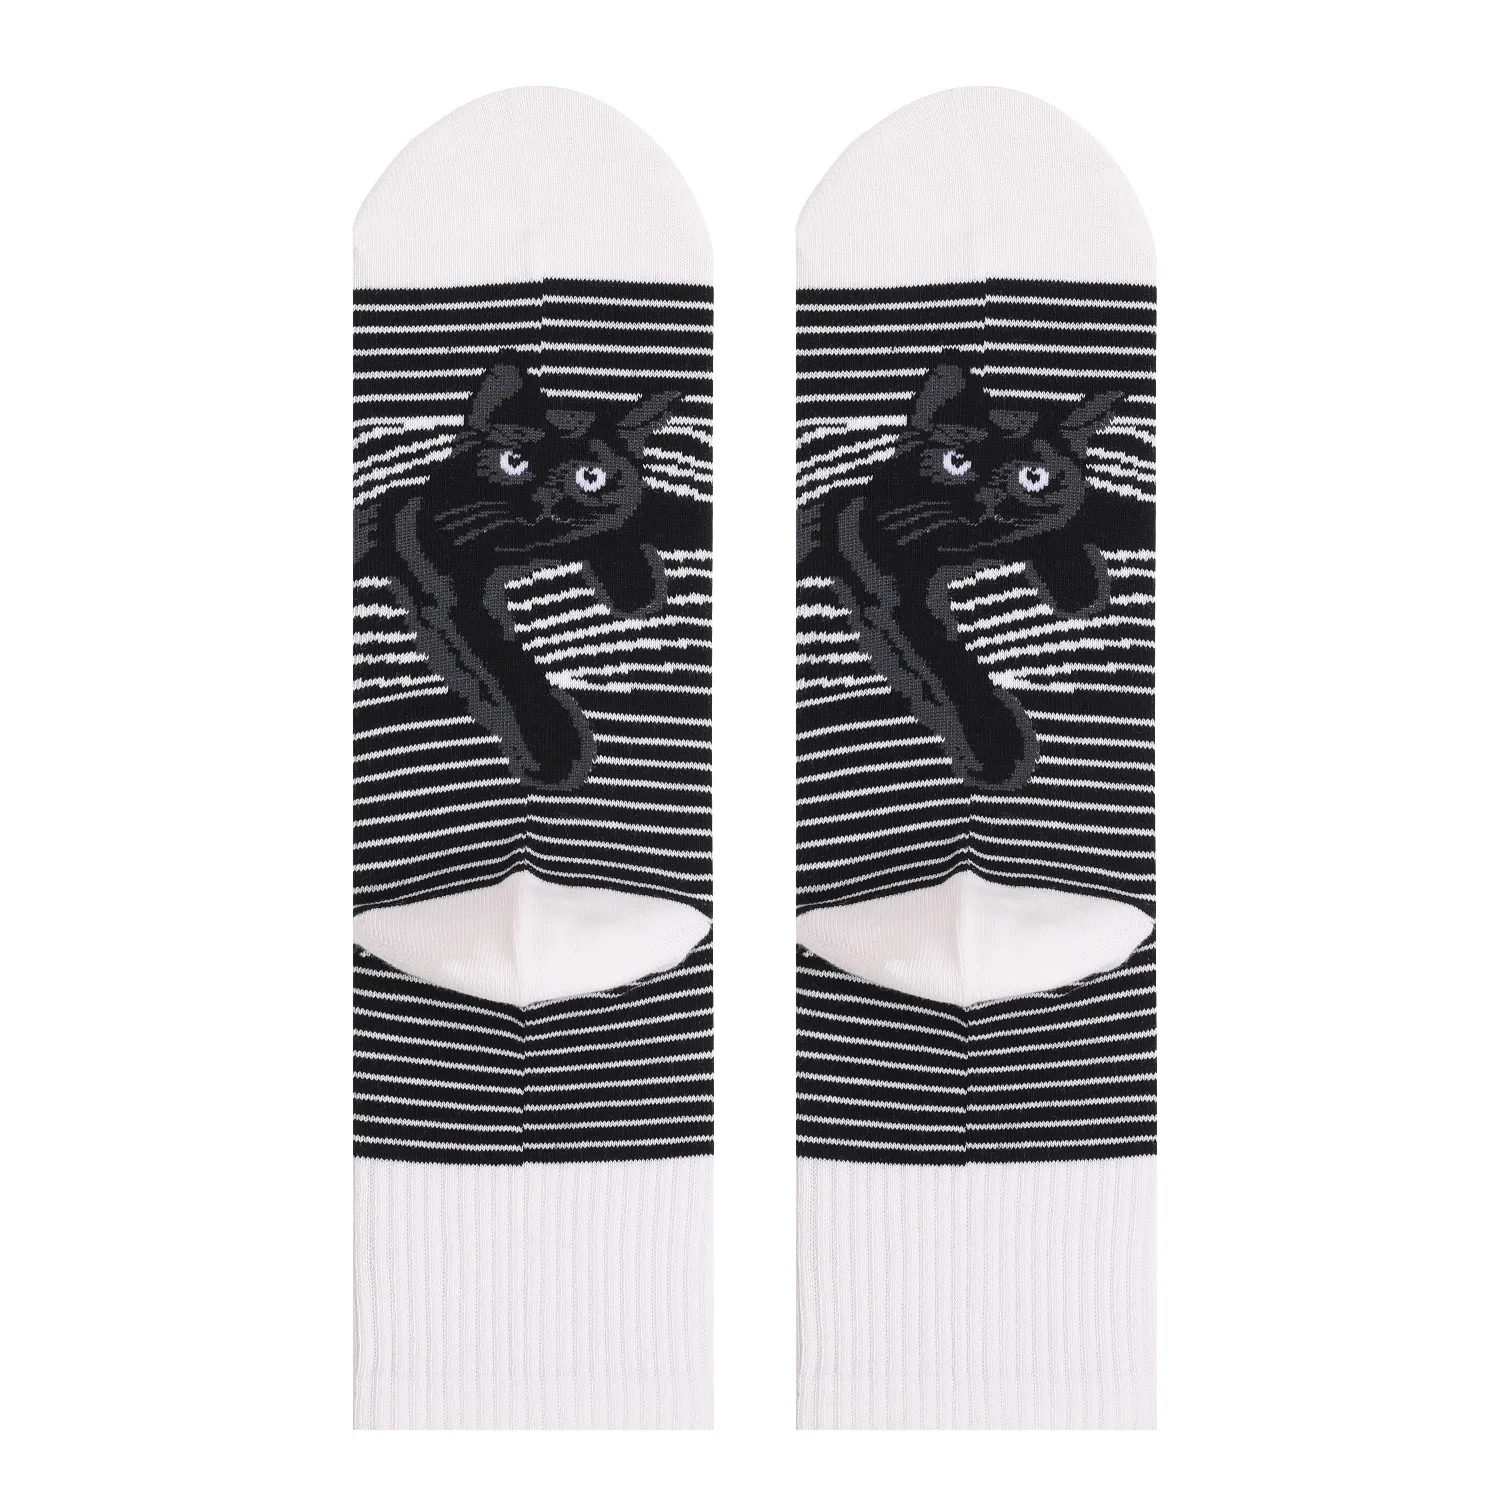 3 Pairs The New Men's Socks Black and White Striped Animal Cat Print Plus Size Men and Women In The Tube Socks Funny Socks